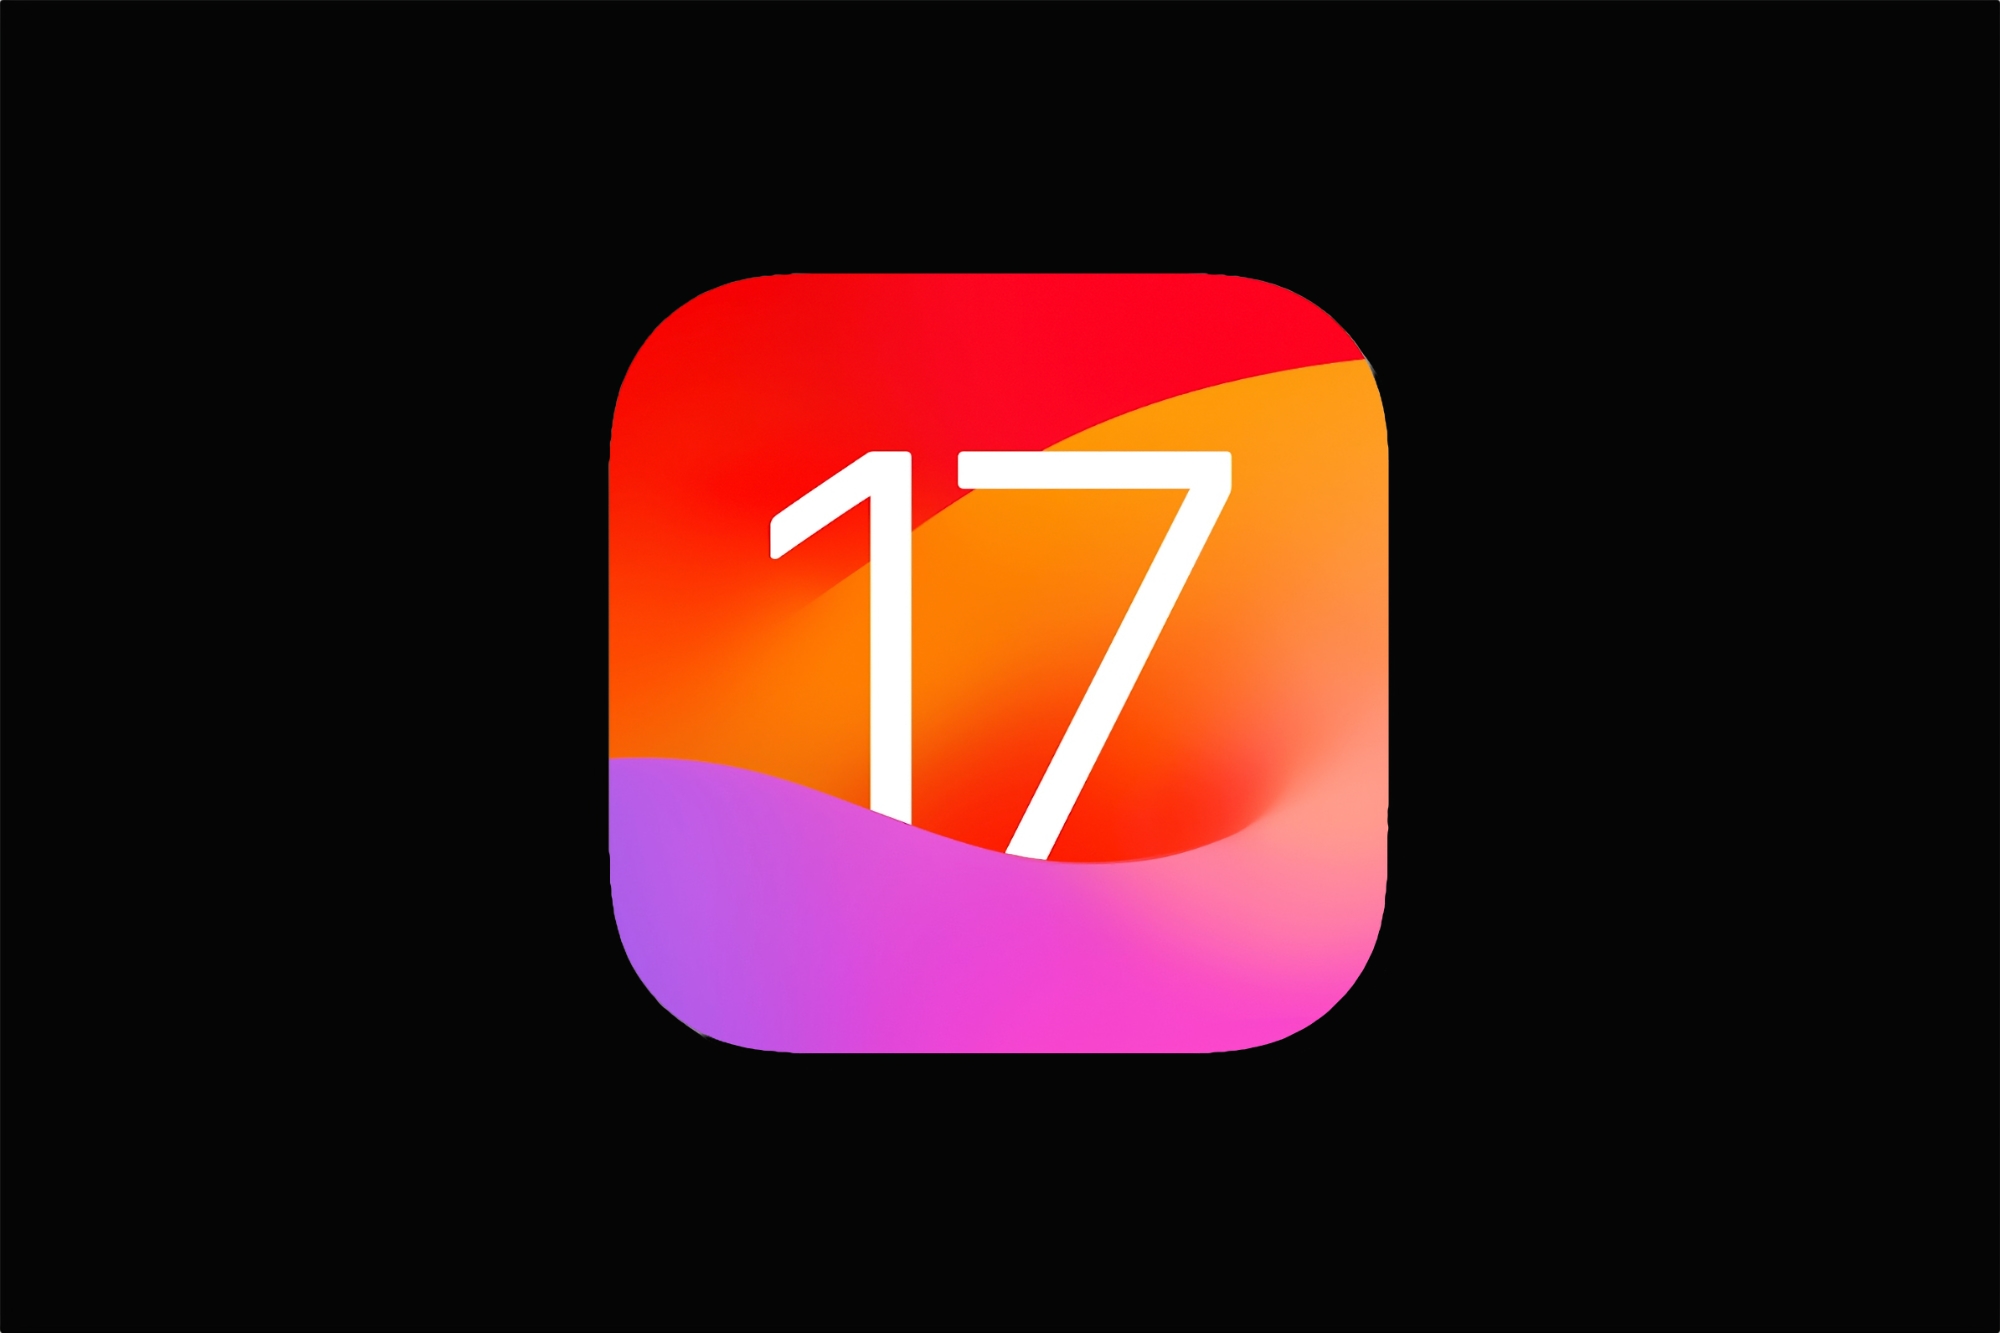 Apple rilascia le prime versioni beta di iOS 17 e iPadOS 17